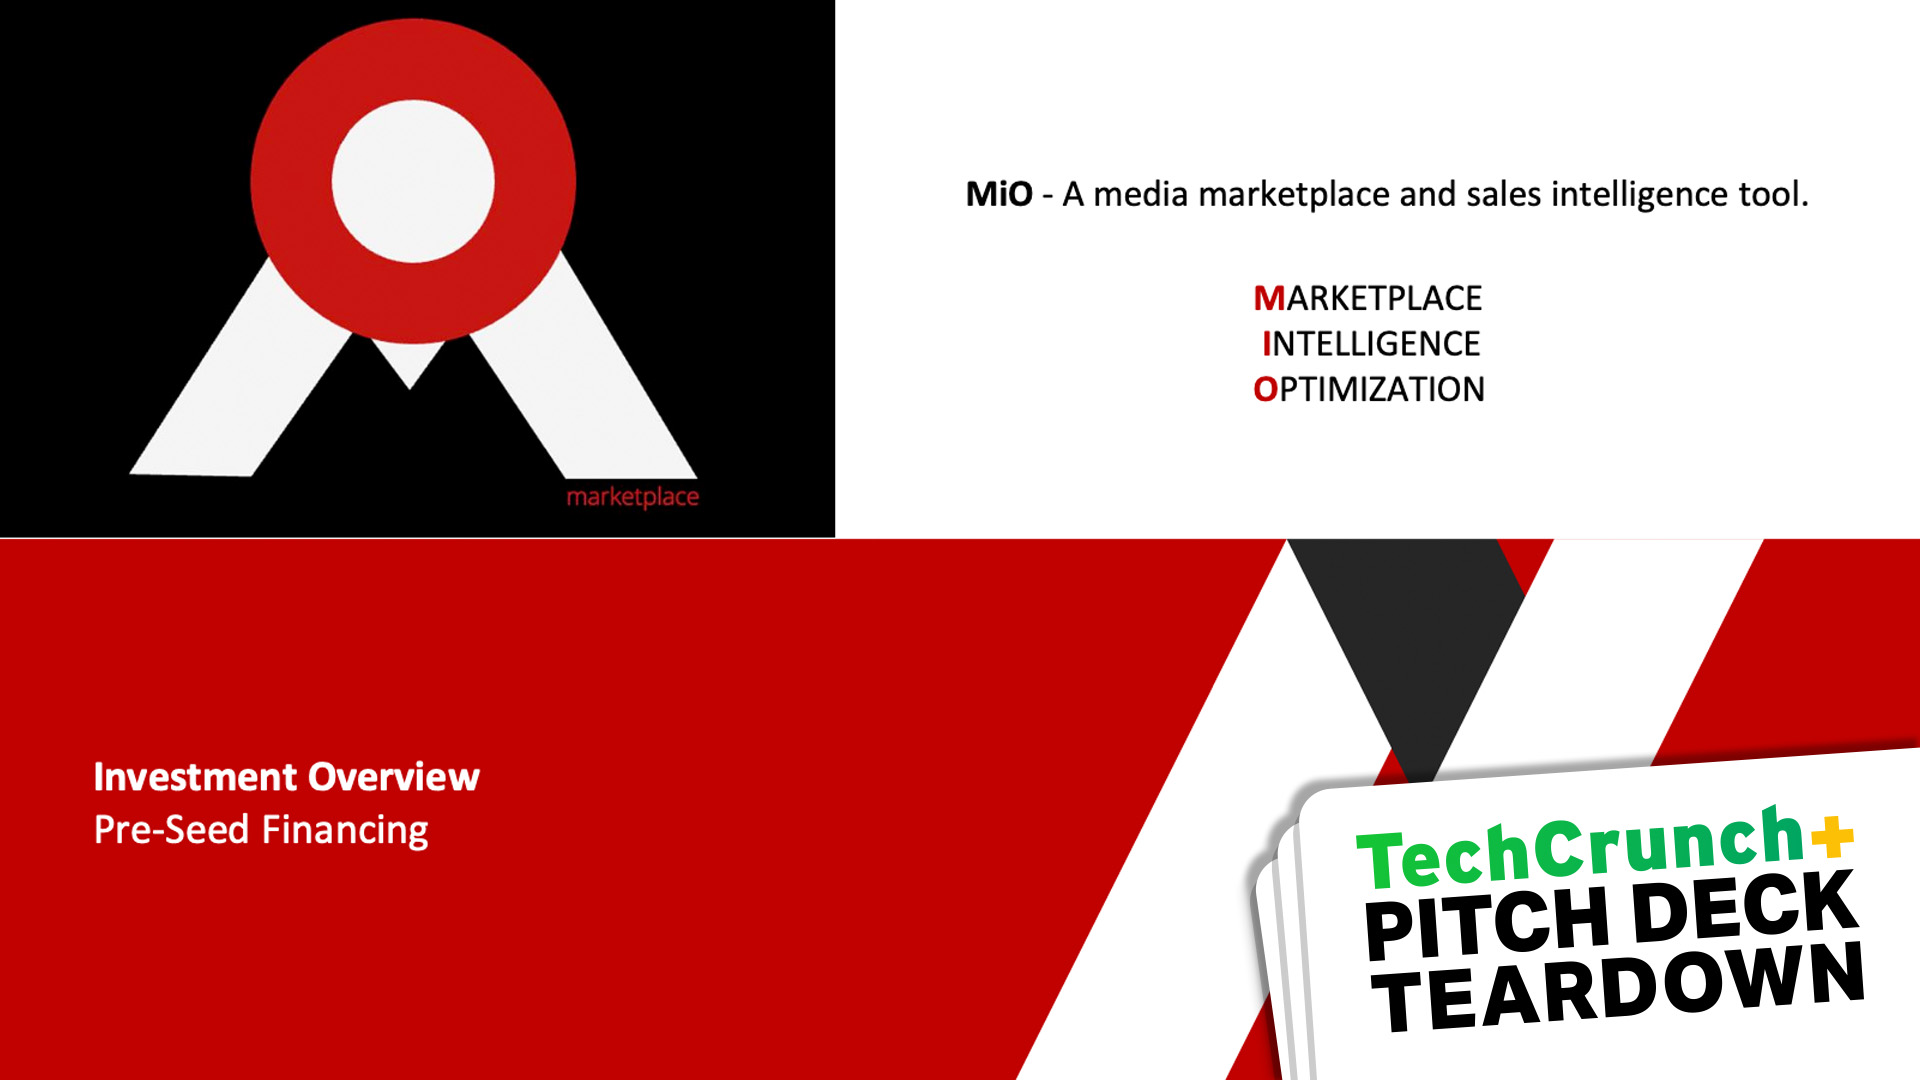 MiO: a media market and sales intelligence tool.  OPTIMIZATION OF MARKET INTELLIGENCE